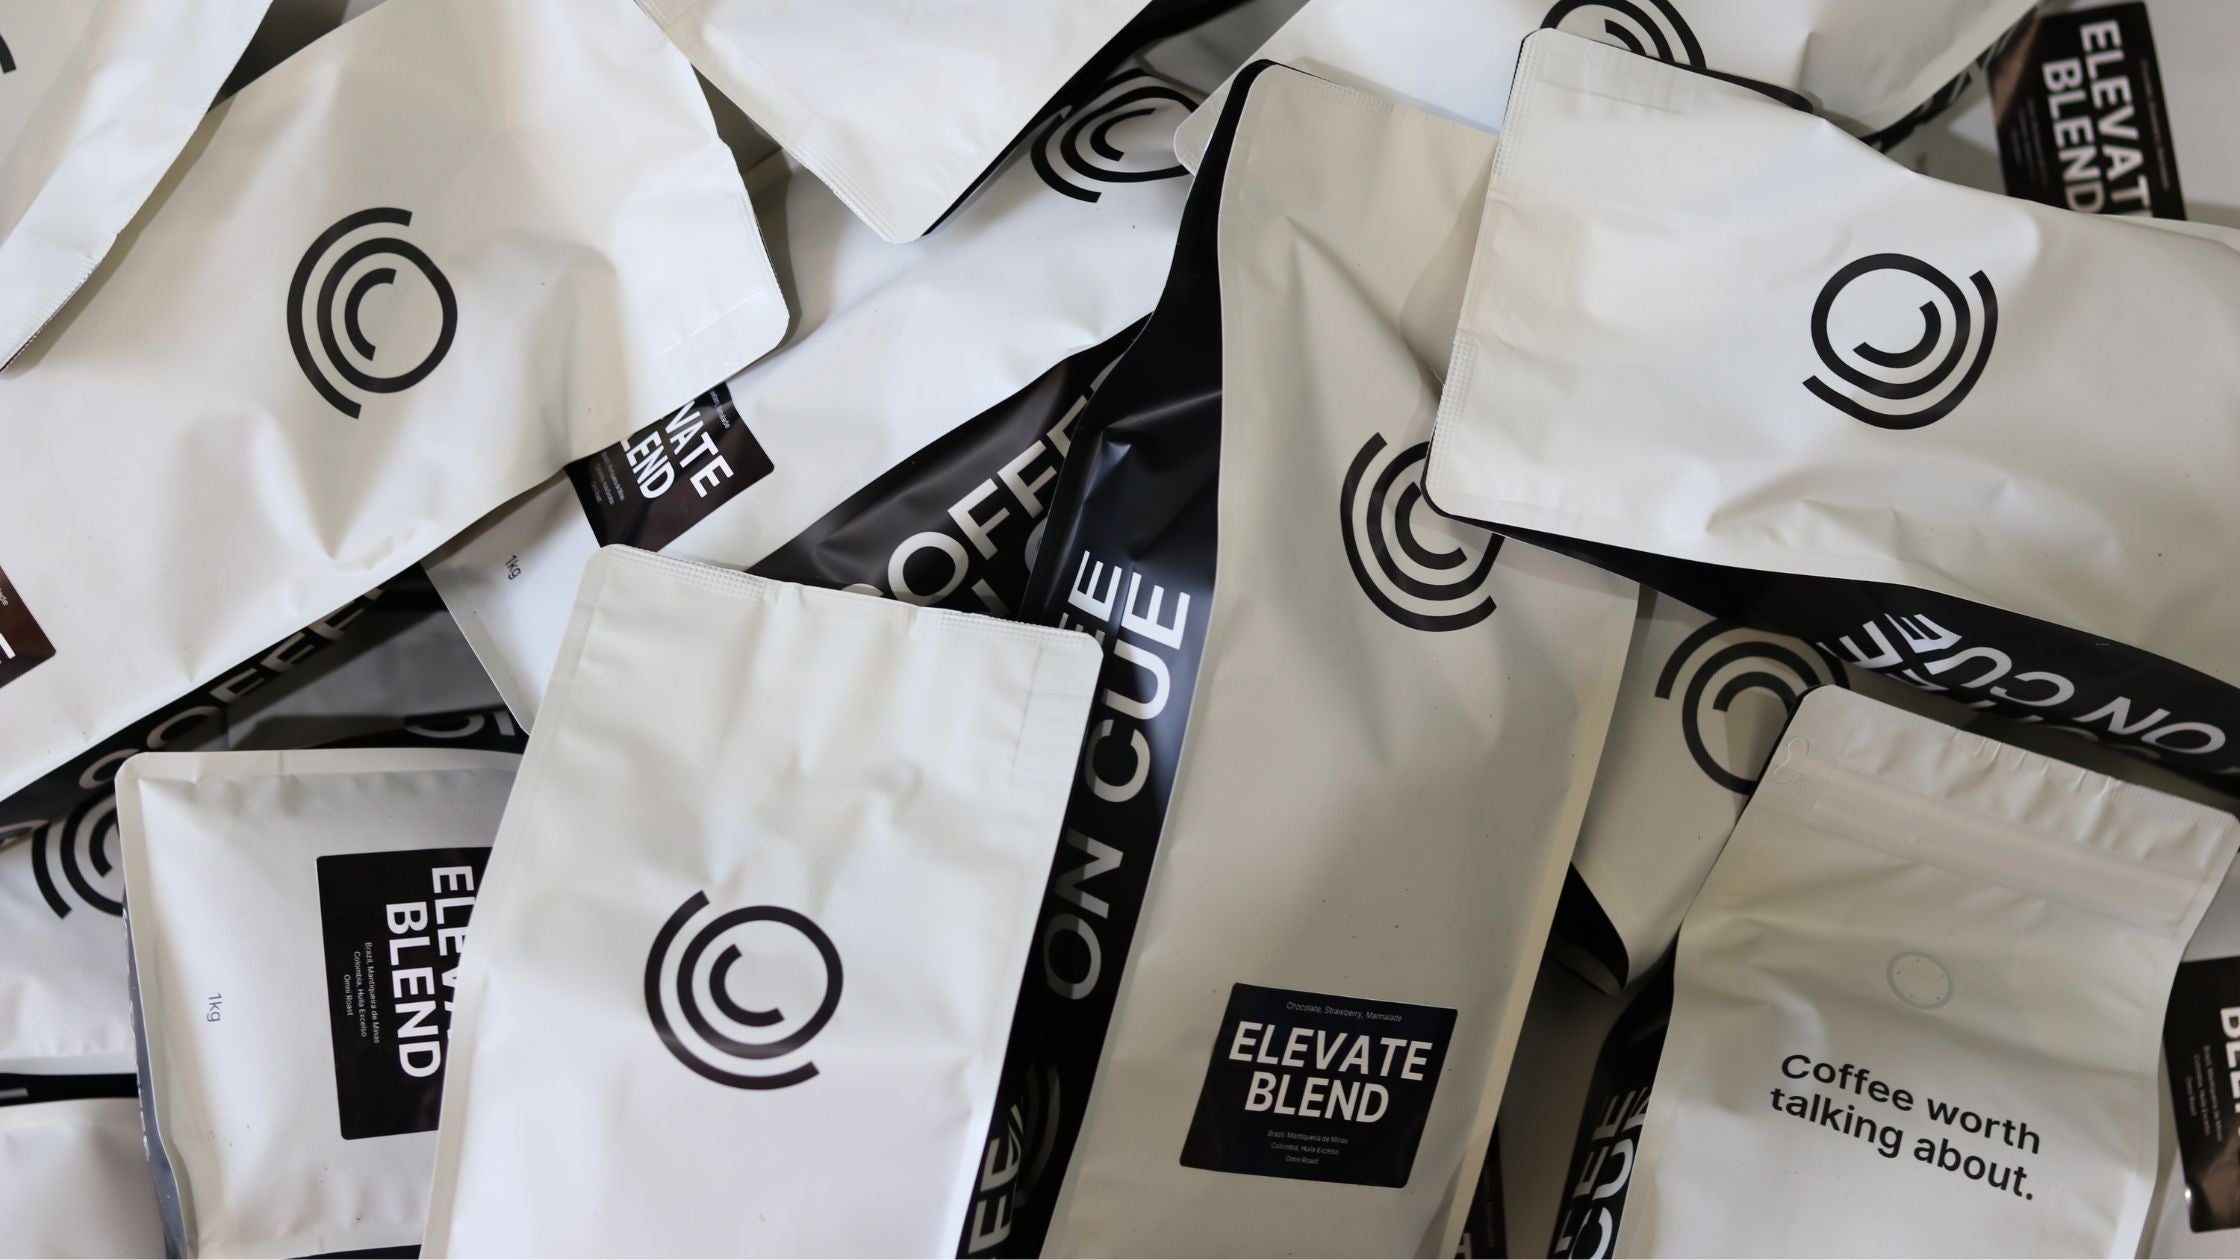 Bags of Elevate Blend coffee